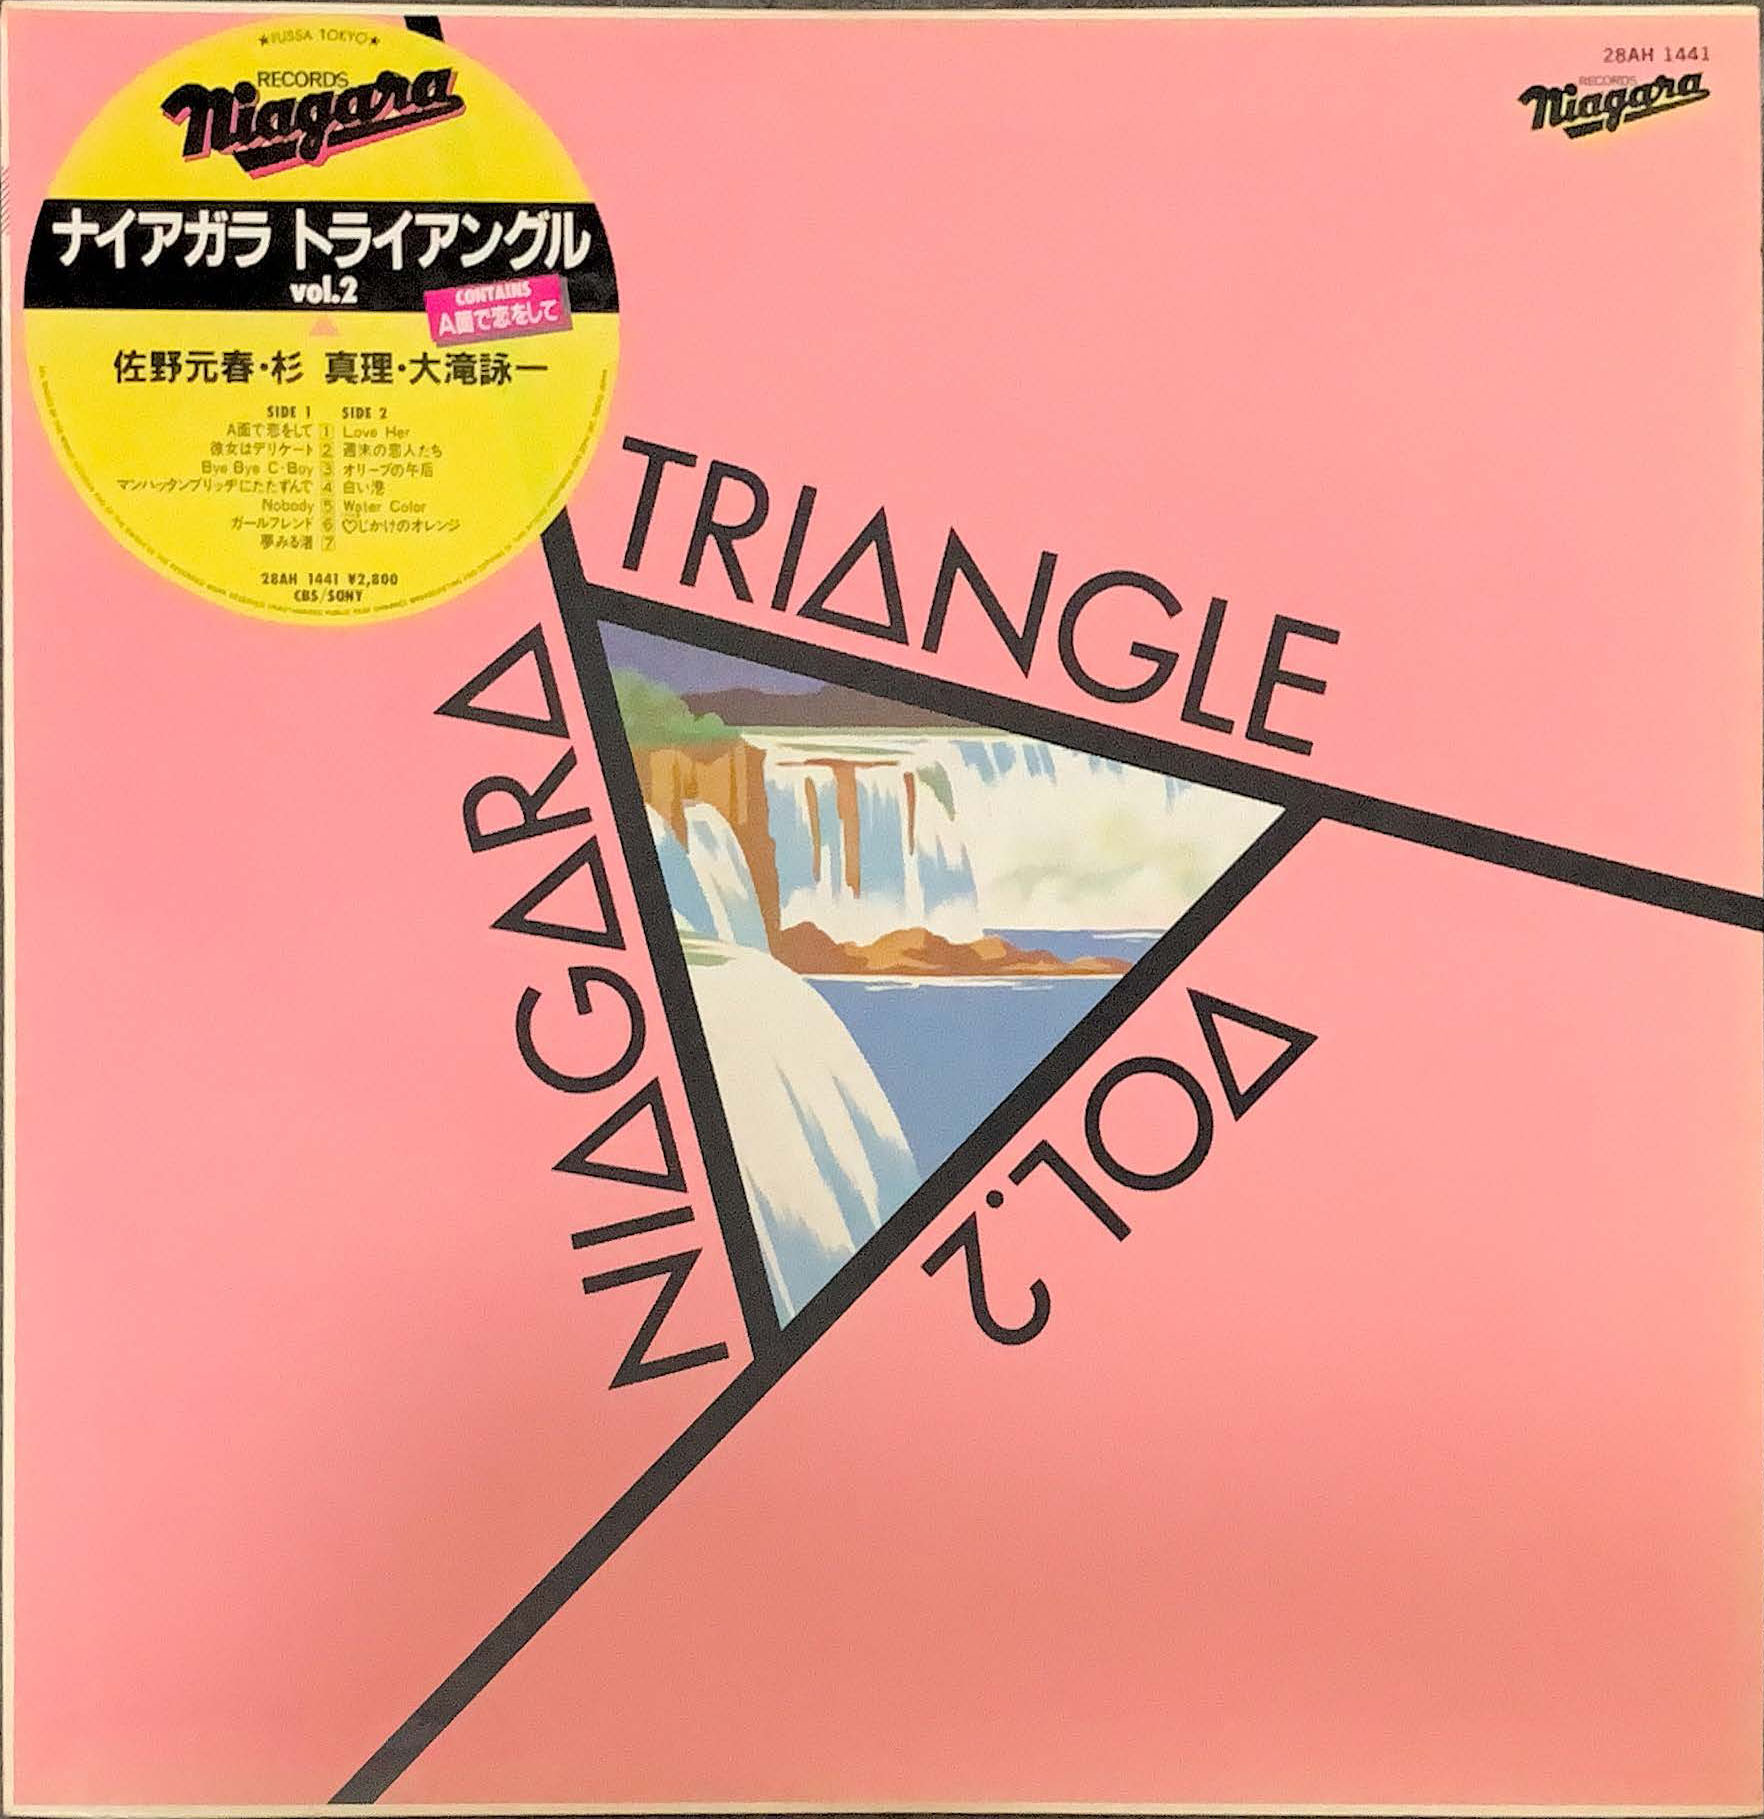 NIAGARA TRIANGLE Vol.2 [LP] -ナイアガラ トライアングル - bar chiba 